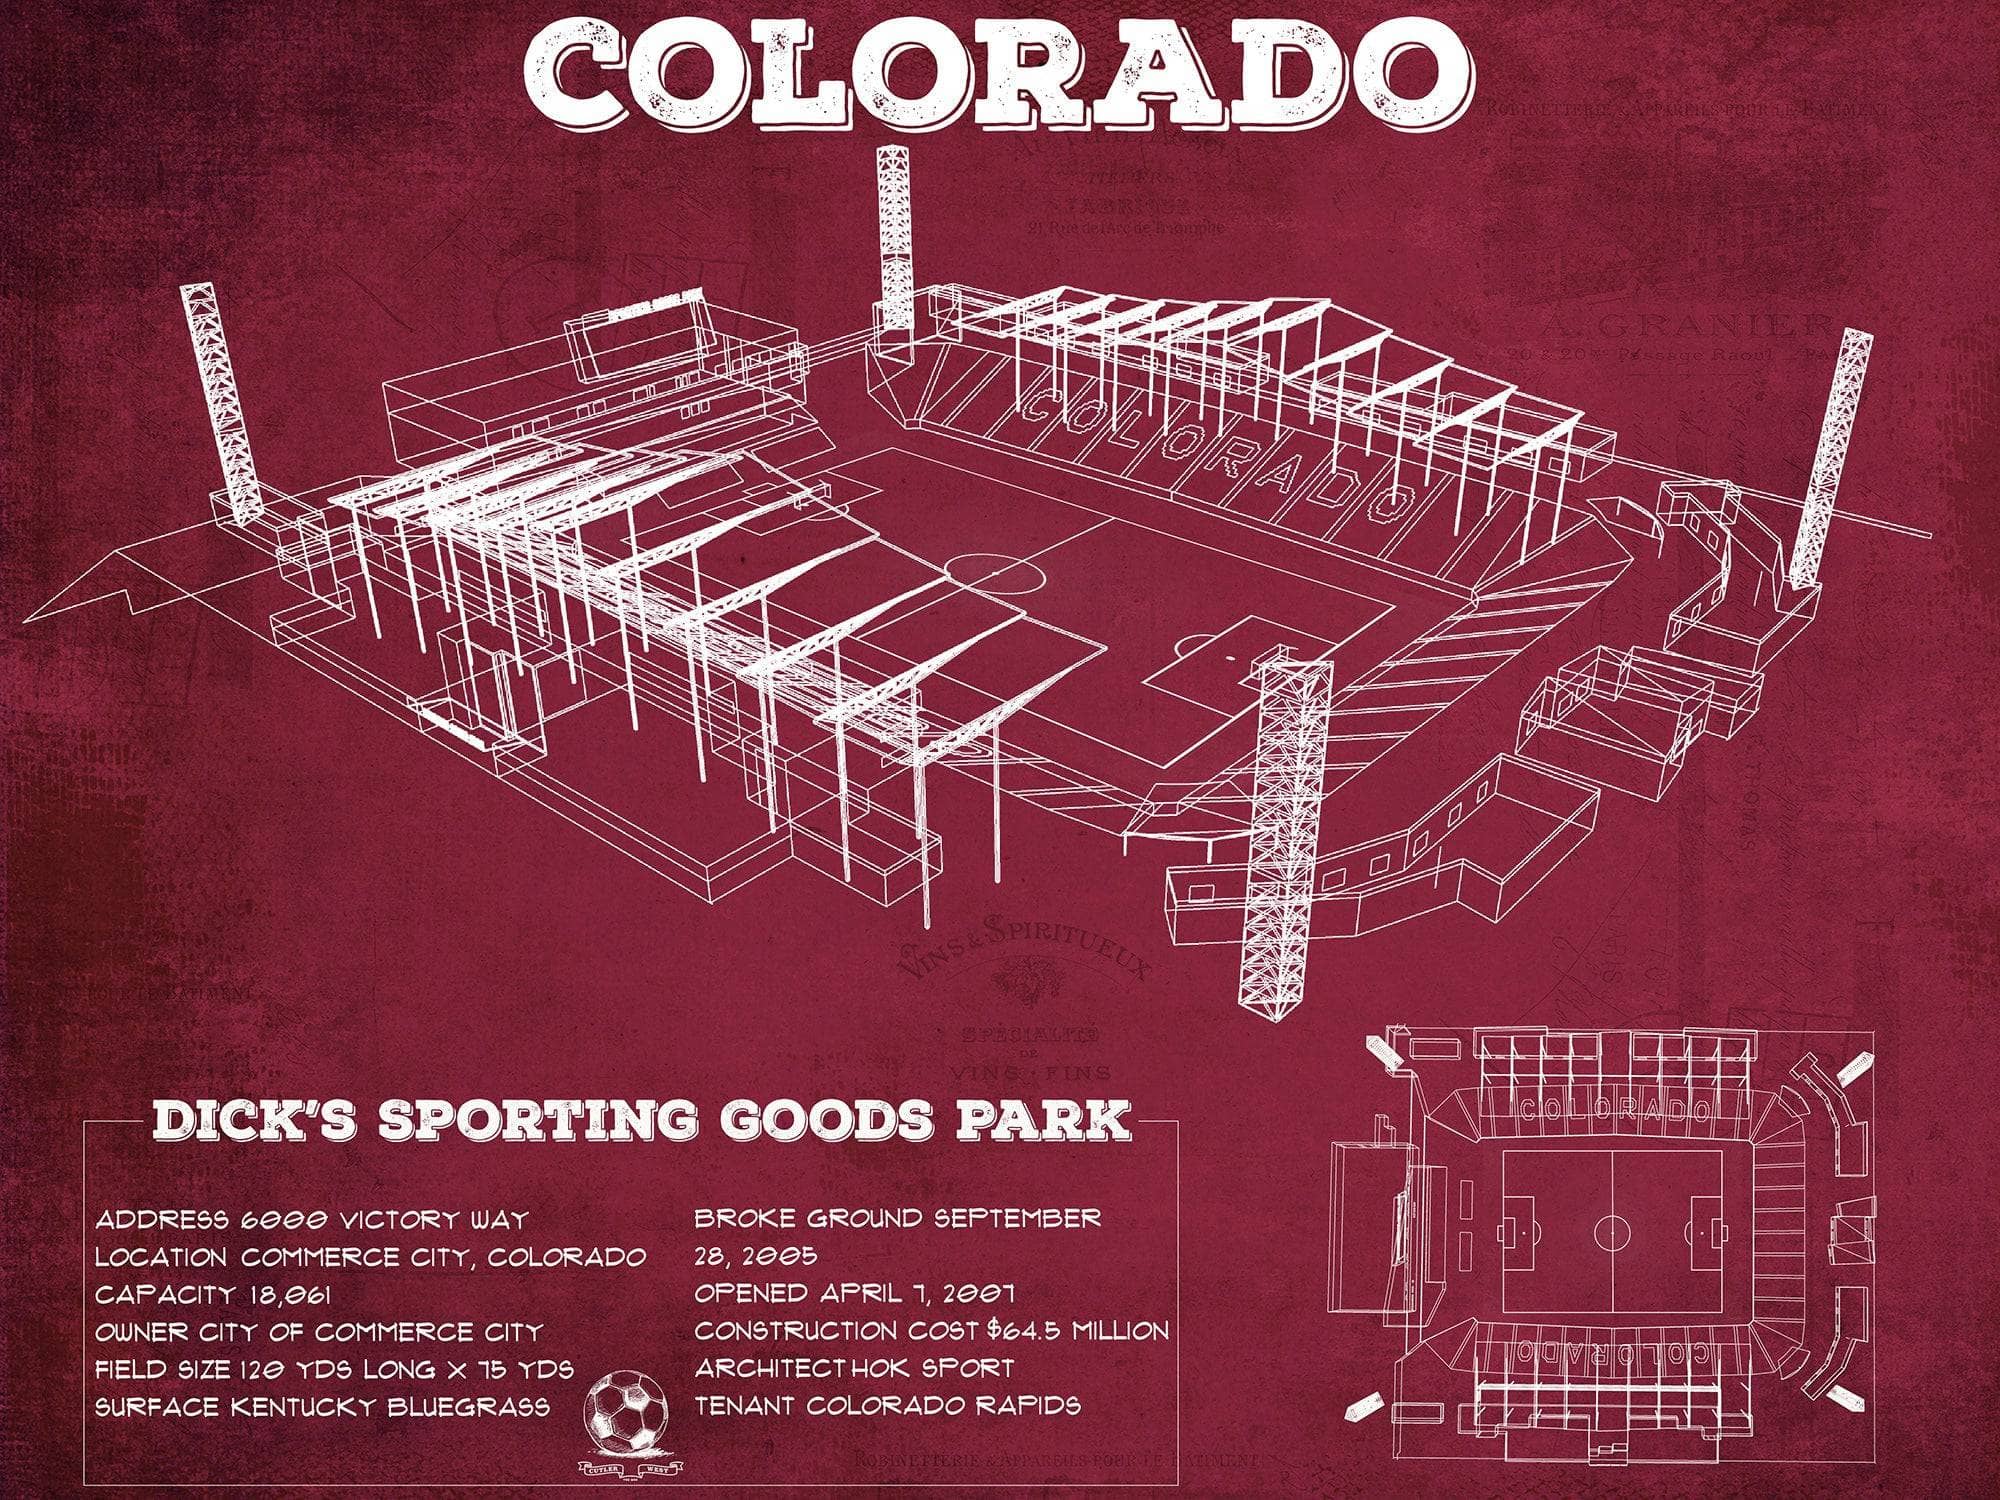 Cutler West Soccer Collection 14" x 11" / Unframed Colorado Rapids MLS - Dick's Sporting Goods Park Vintage Soccer Print 750972373_54347